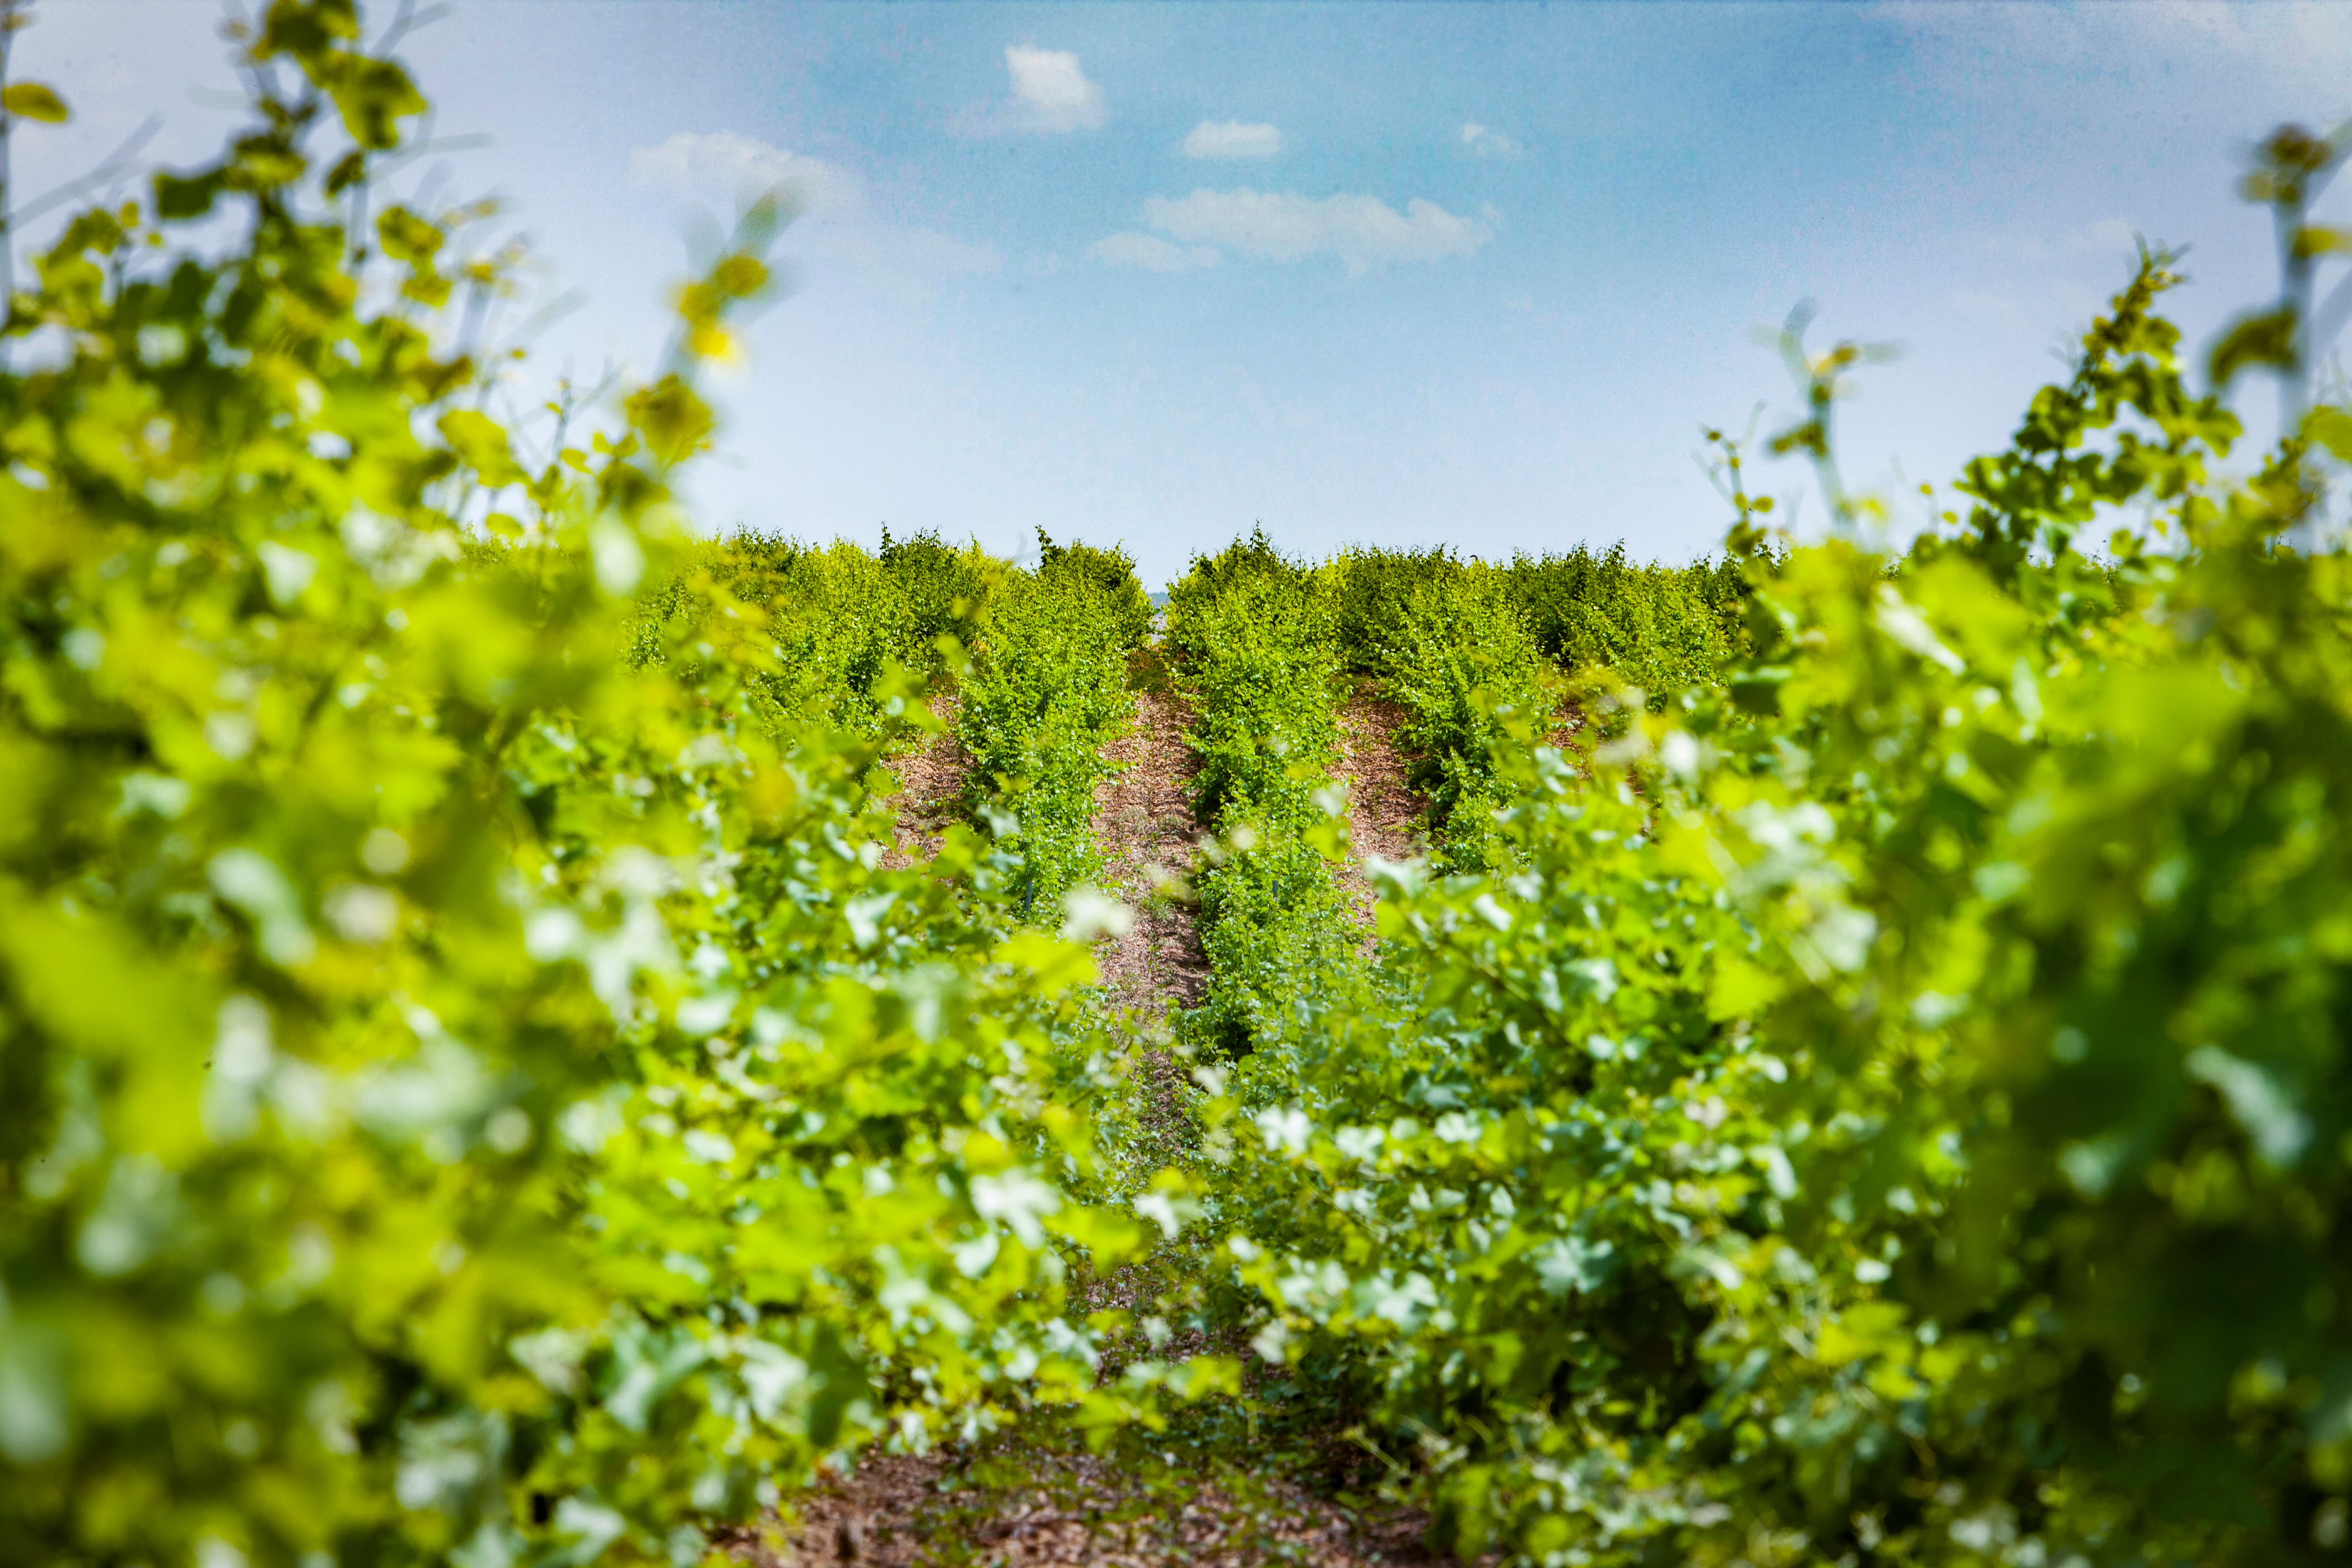 Aura vineyards growing